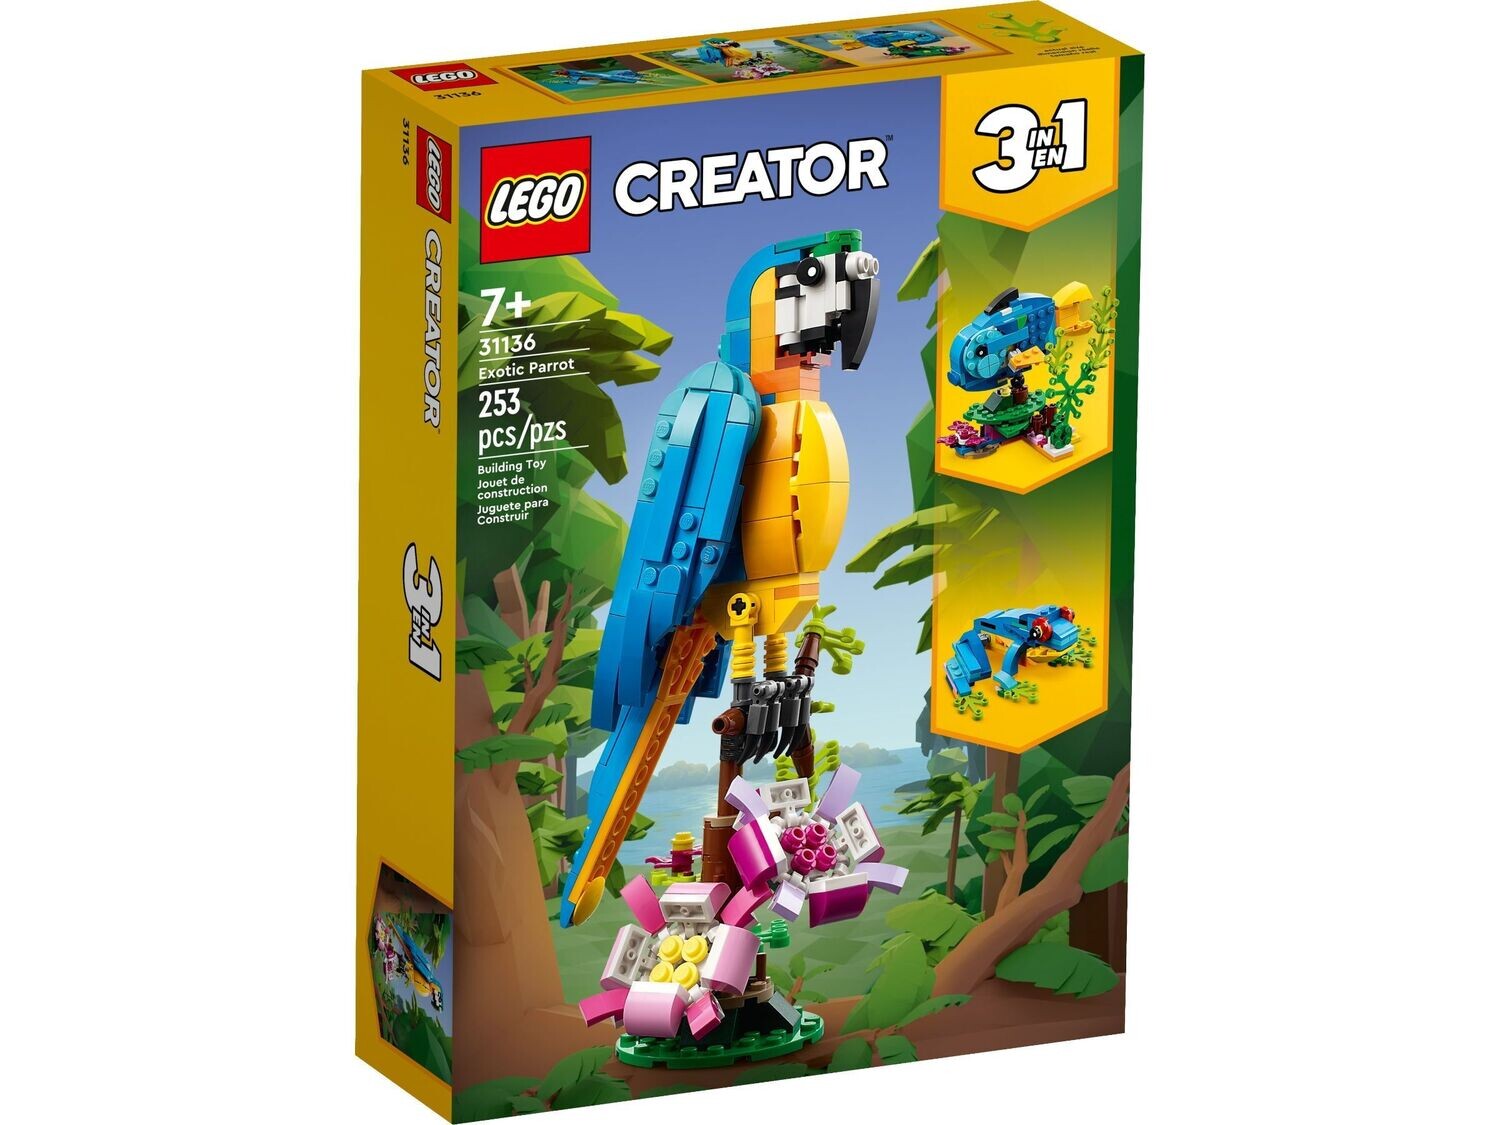 LEGO Creator 3-in-1 31136 - Exotische papegaai